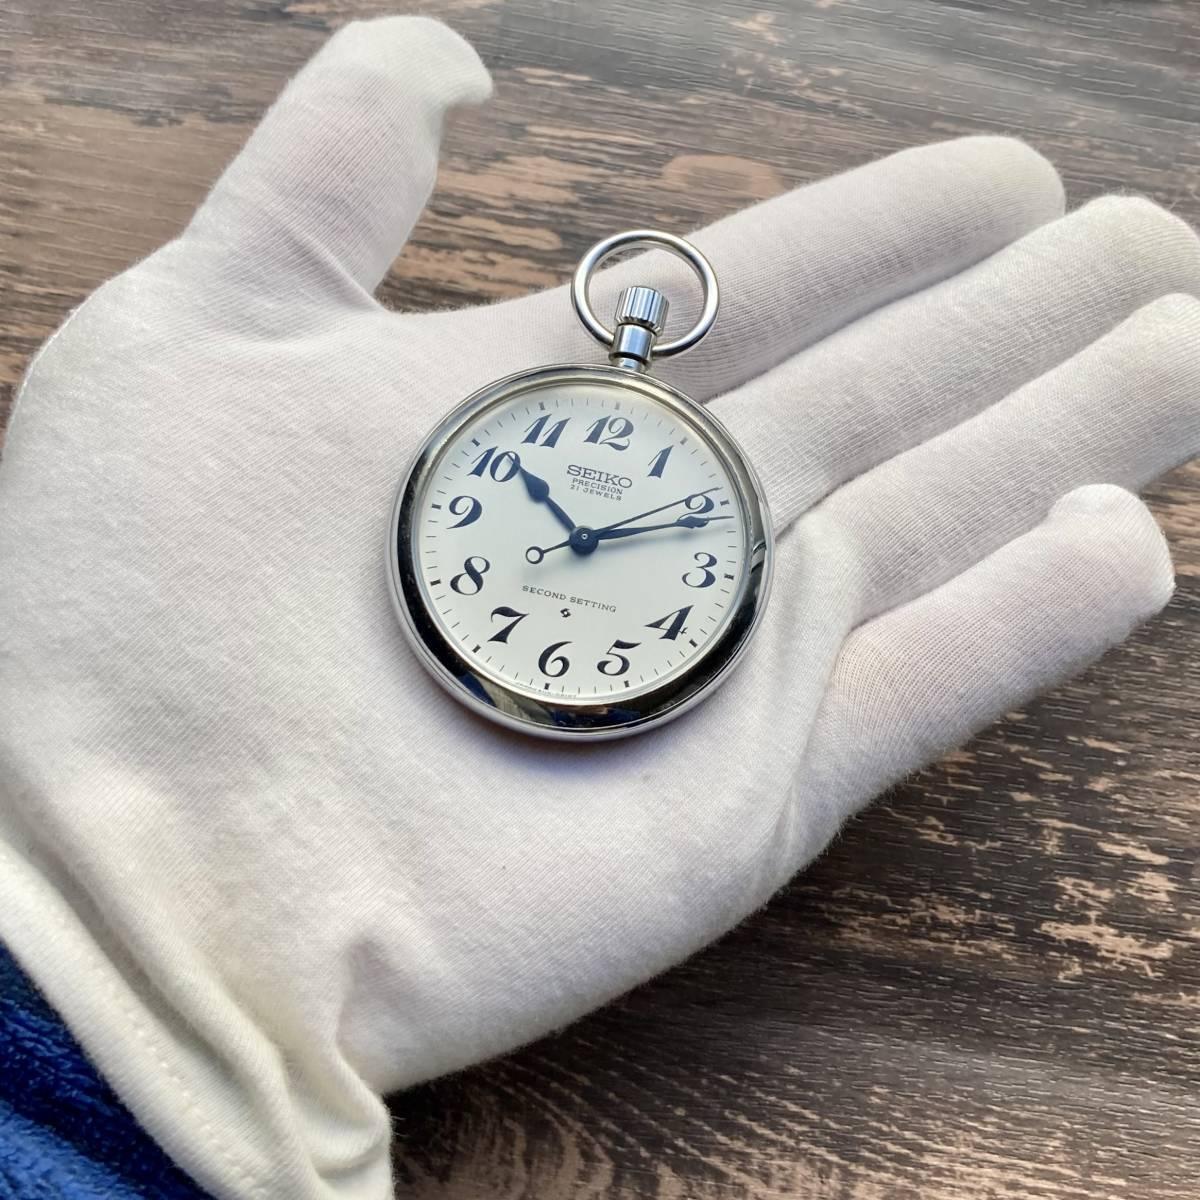 Seiko Pocket Watch Antique Railway Showa Hand Winding 49mm Vintage Silver - Murphy Johnson Watches Co.